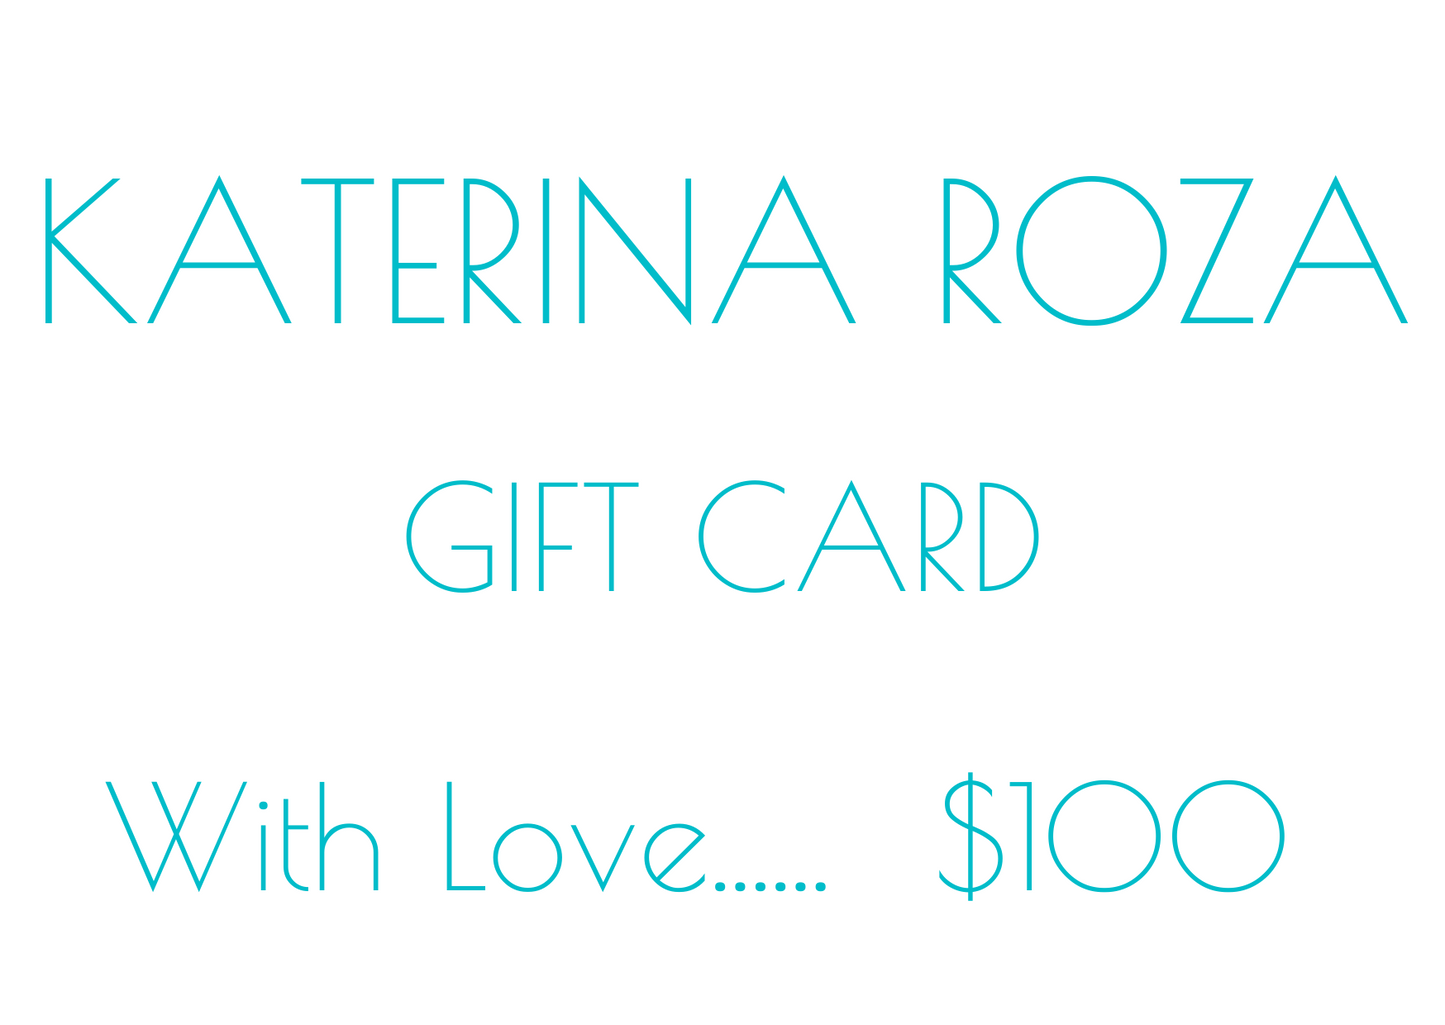 KATERINA ROZA GIFT CARD $100